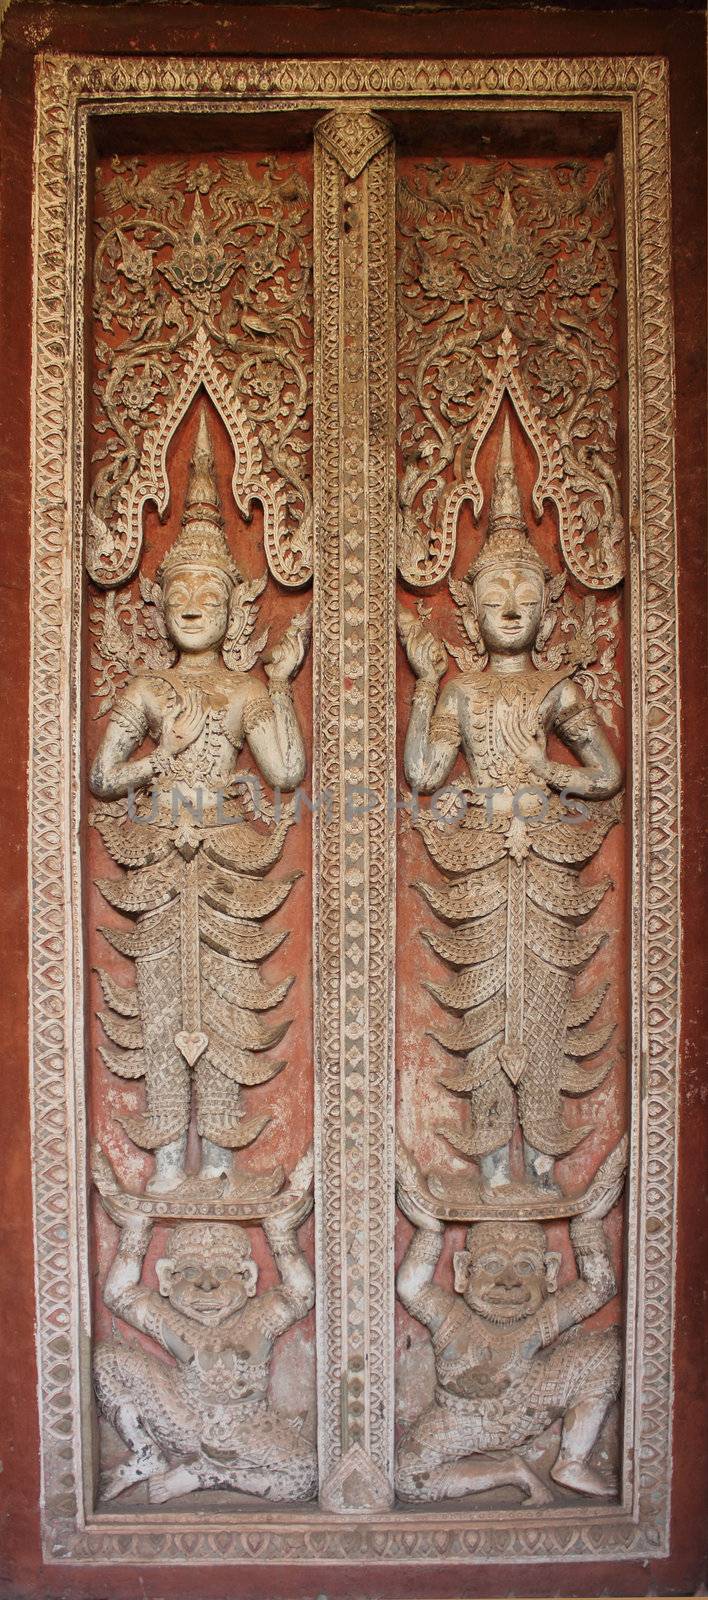 The Buddhist monastery window, Laos by olovedog